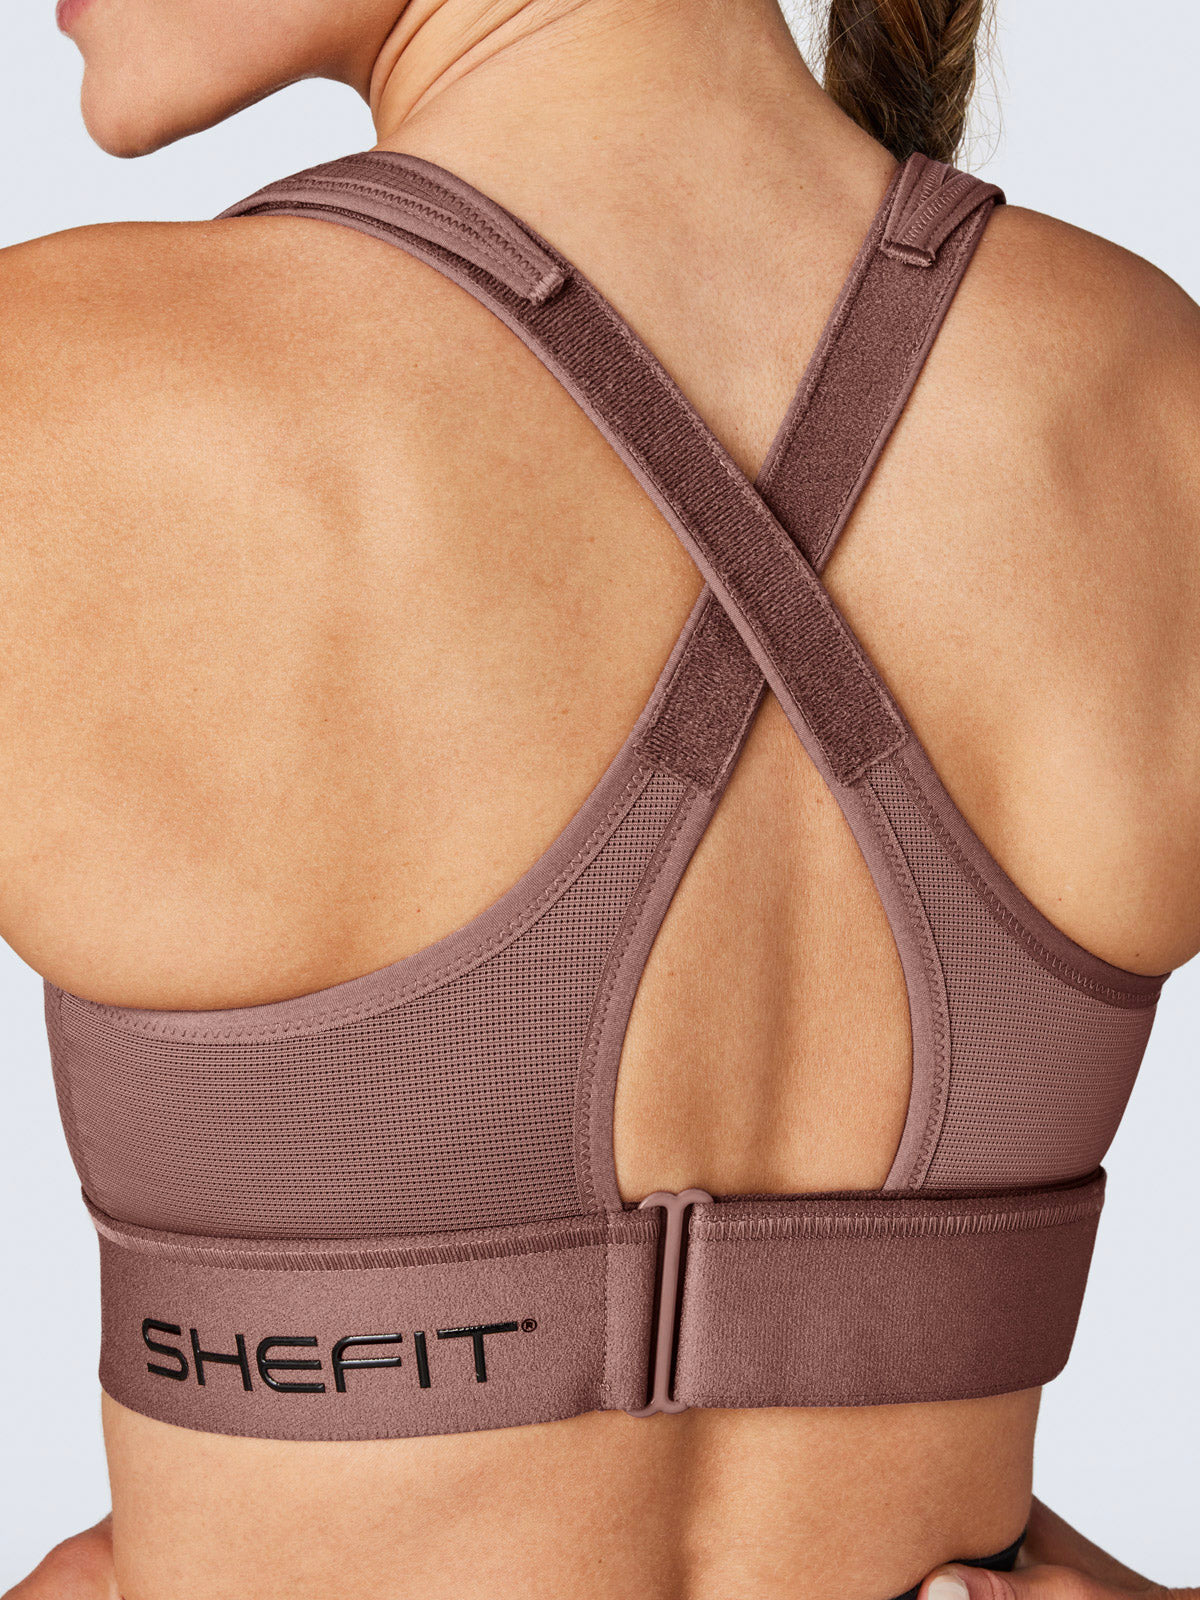 Gorgeous gorgeous girls wear @shefit bras ❤️ #weareshefit #shefit